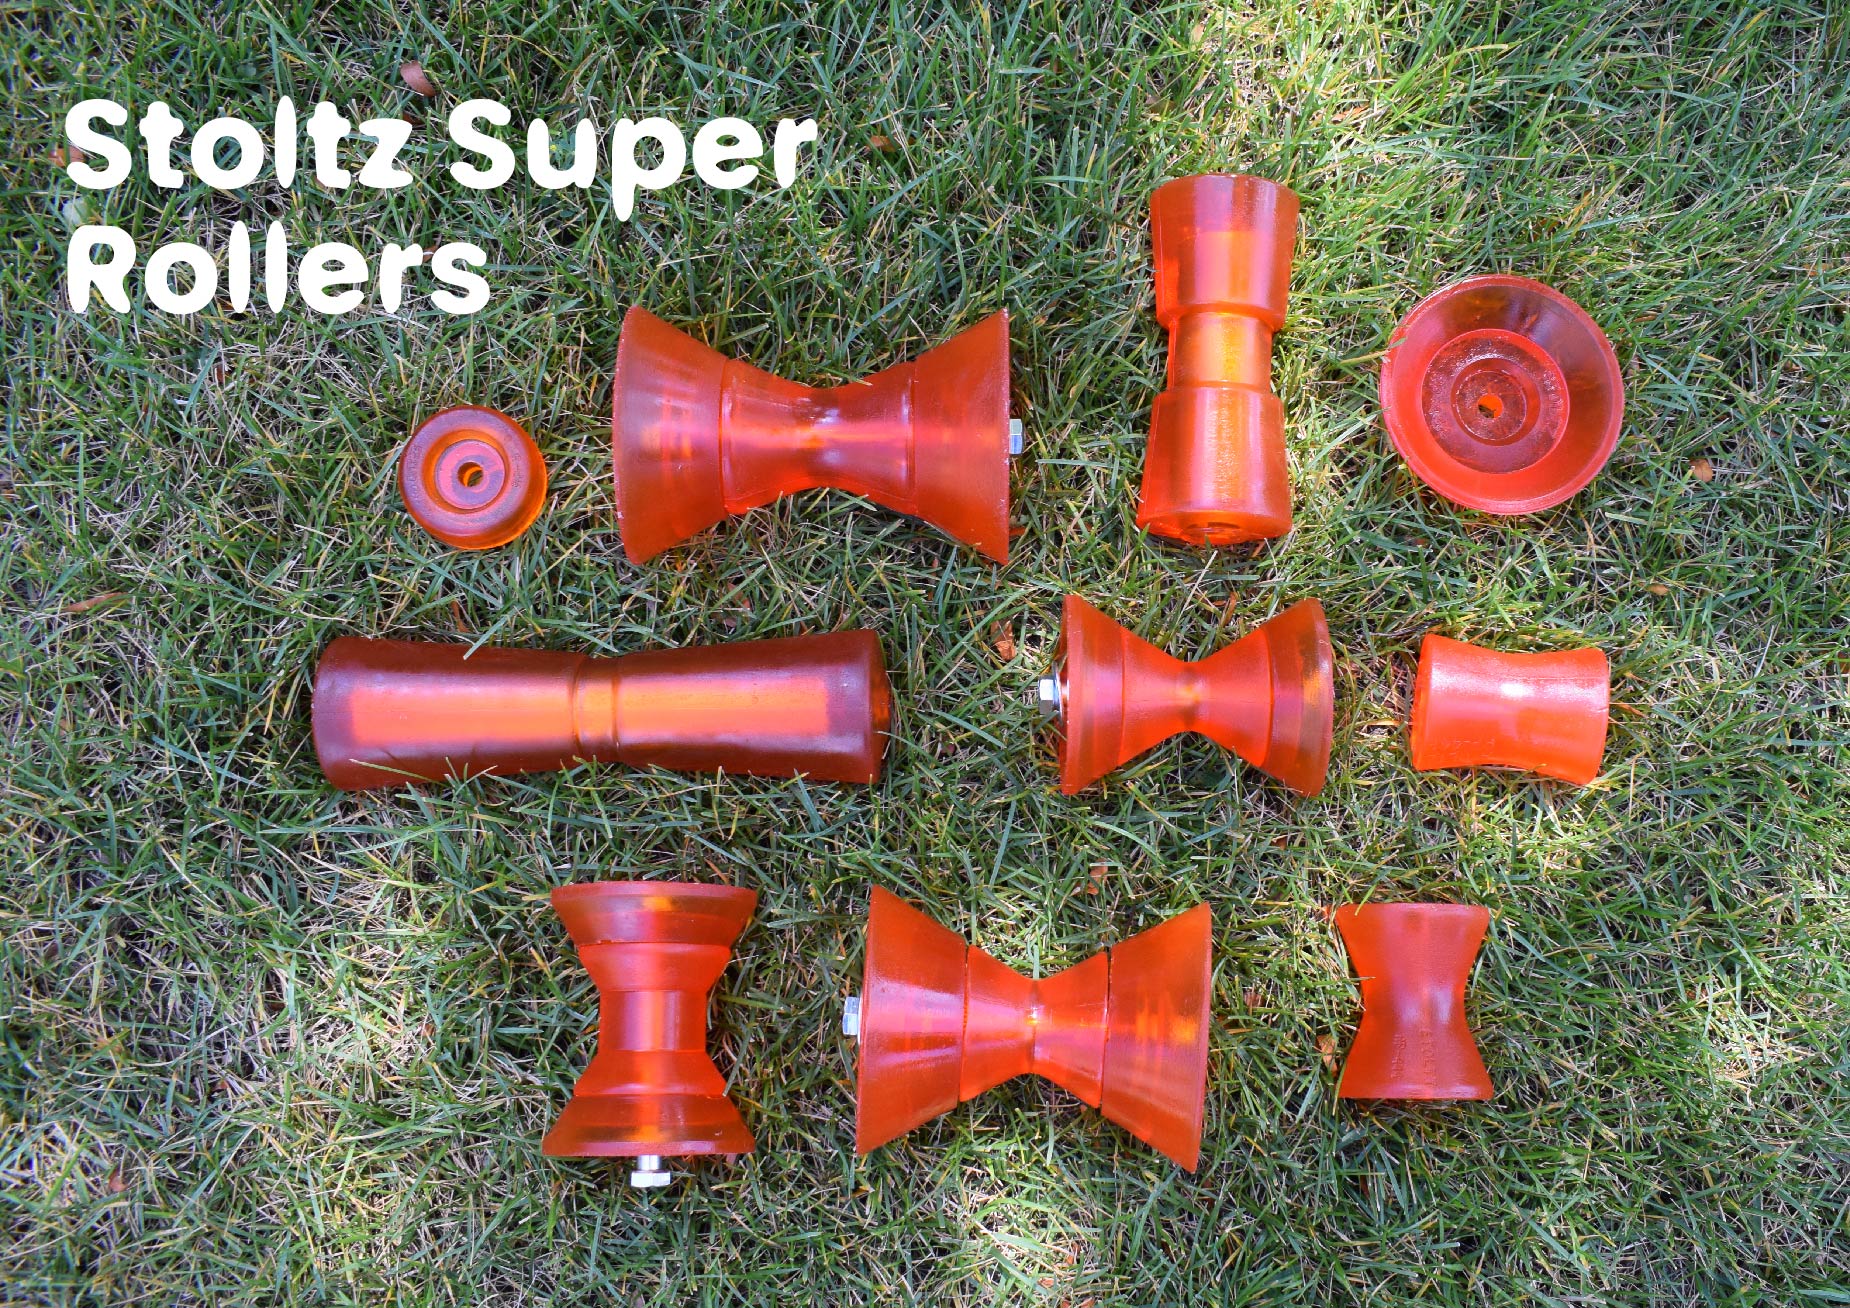 Stoltz Super Rollers